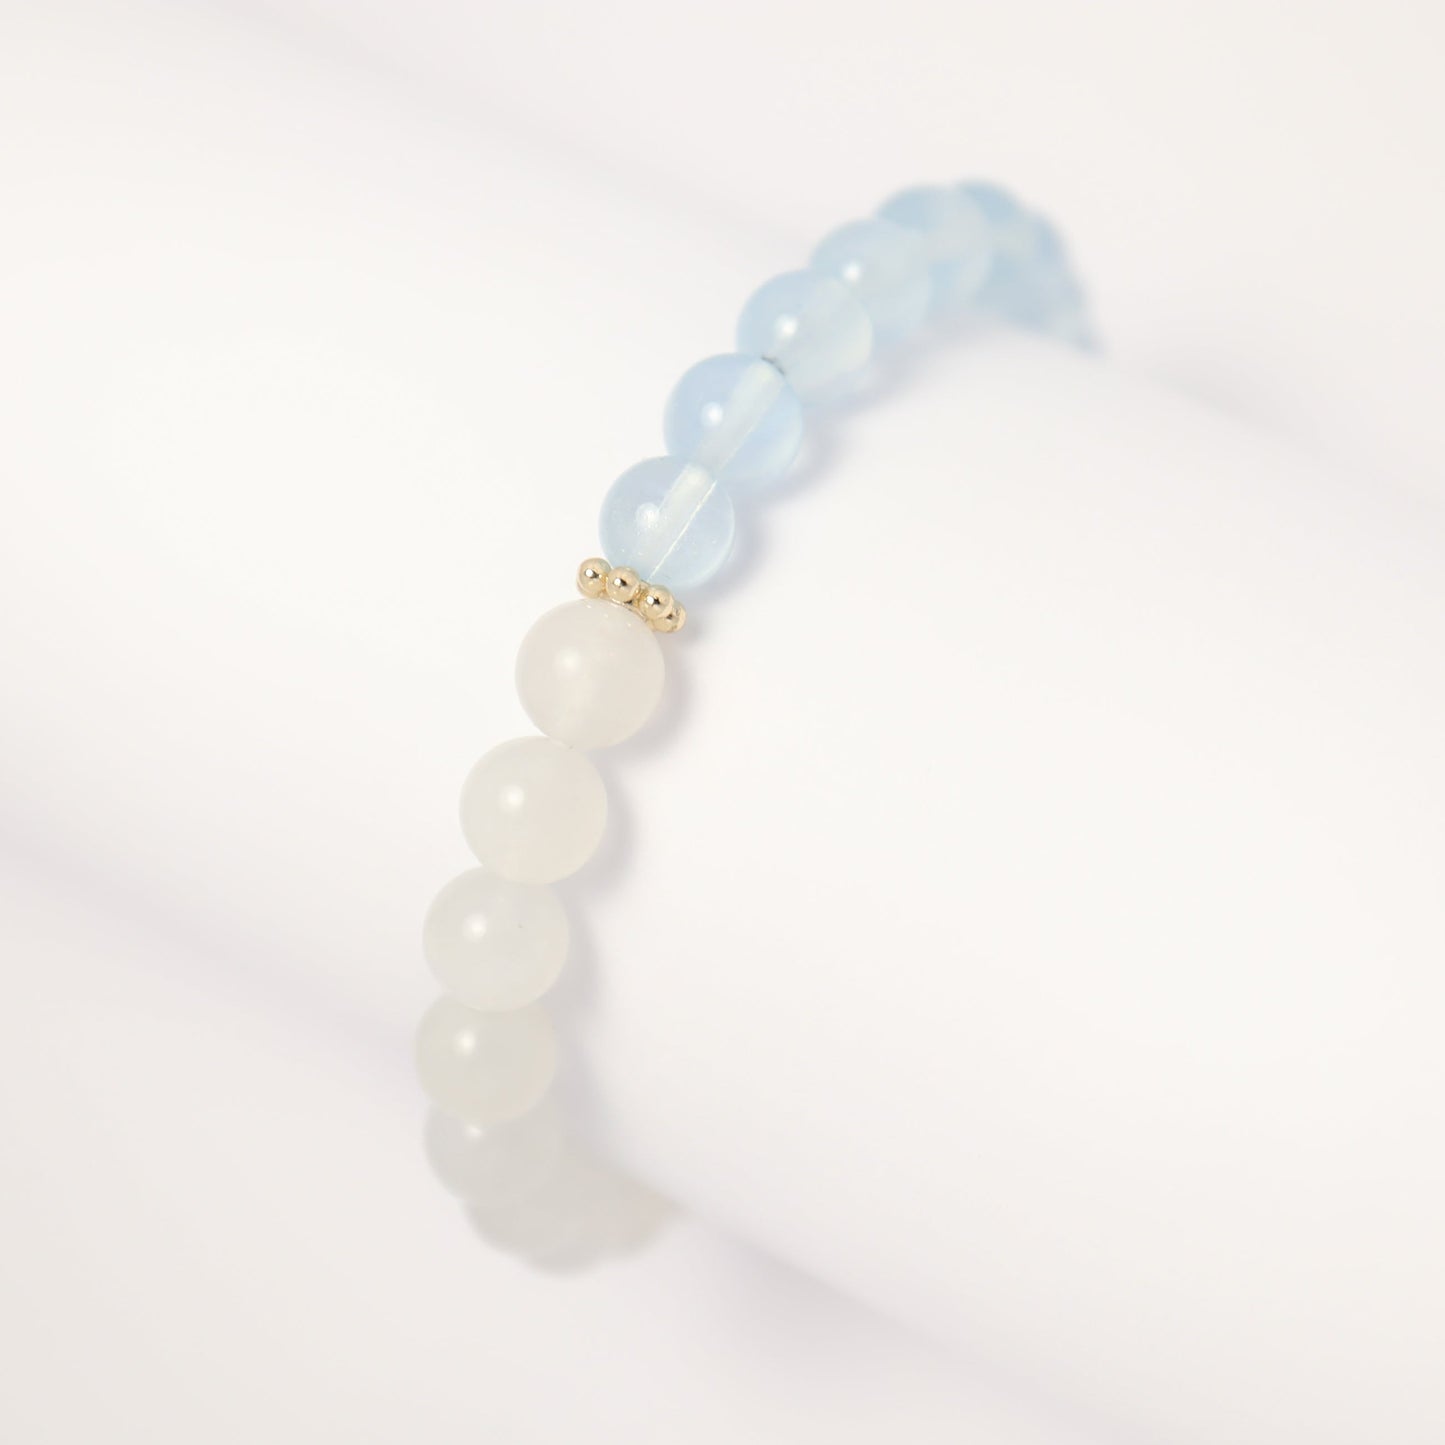 Arctic Ocean - Blue Shine White Moonstone & Aquamarine Gemstone Bracelet